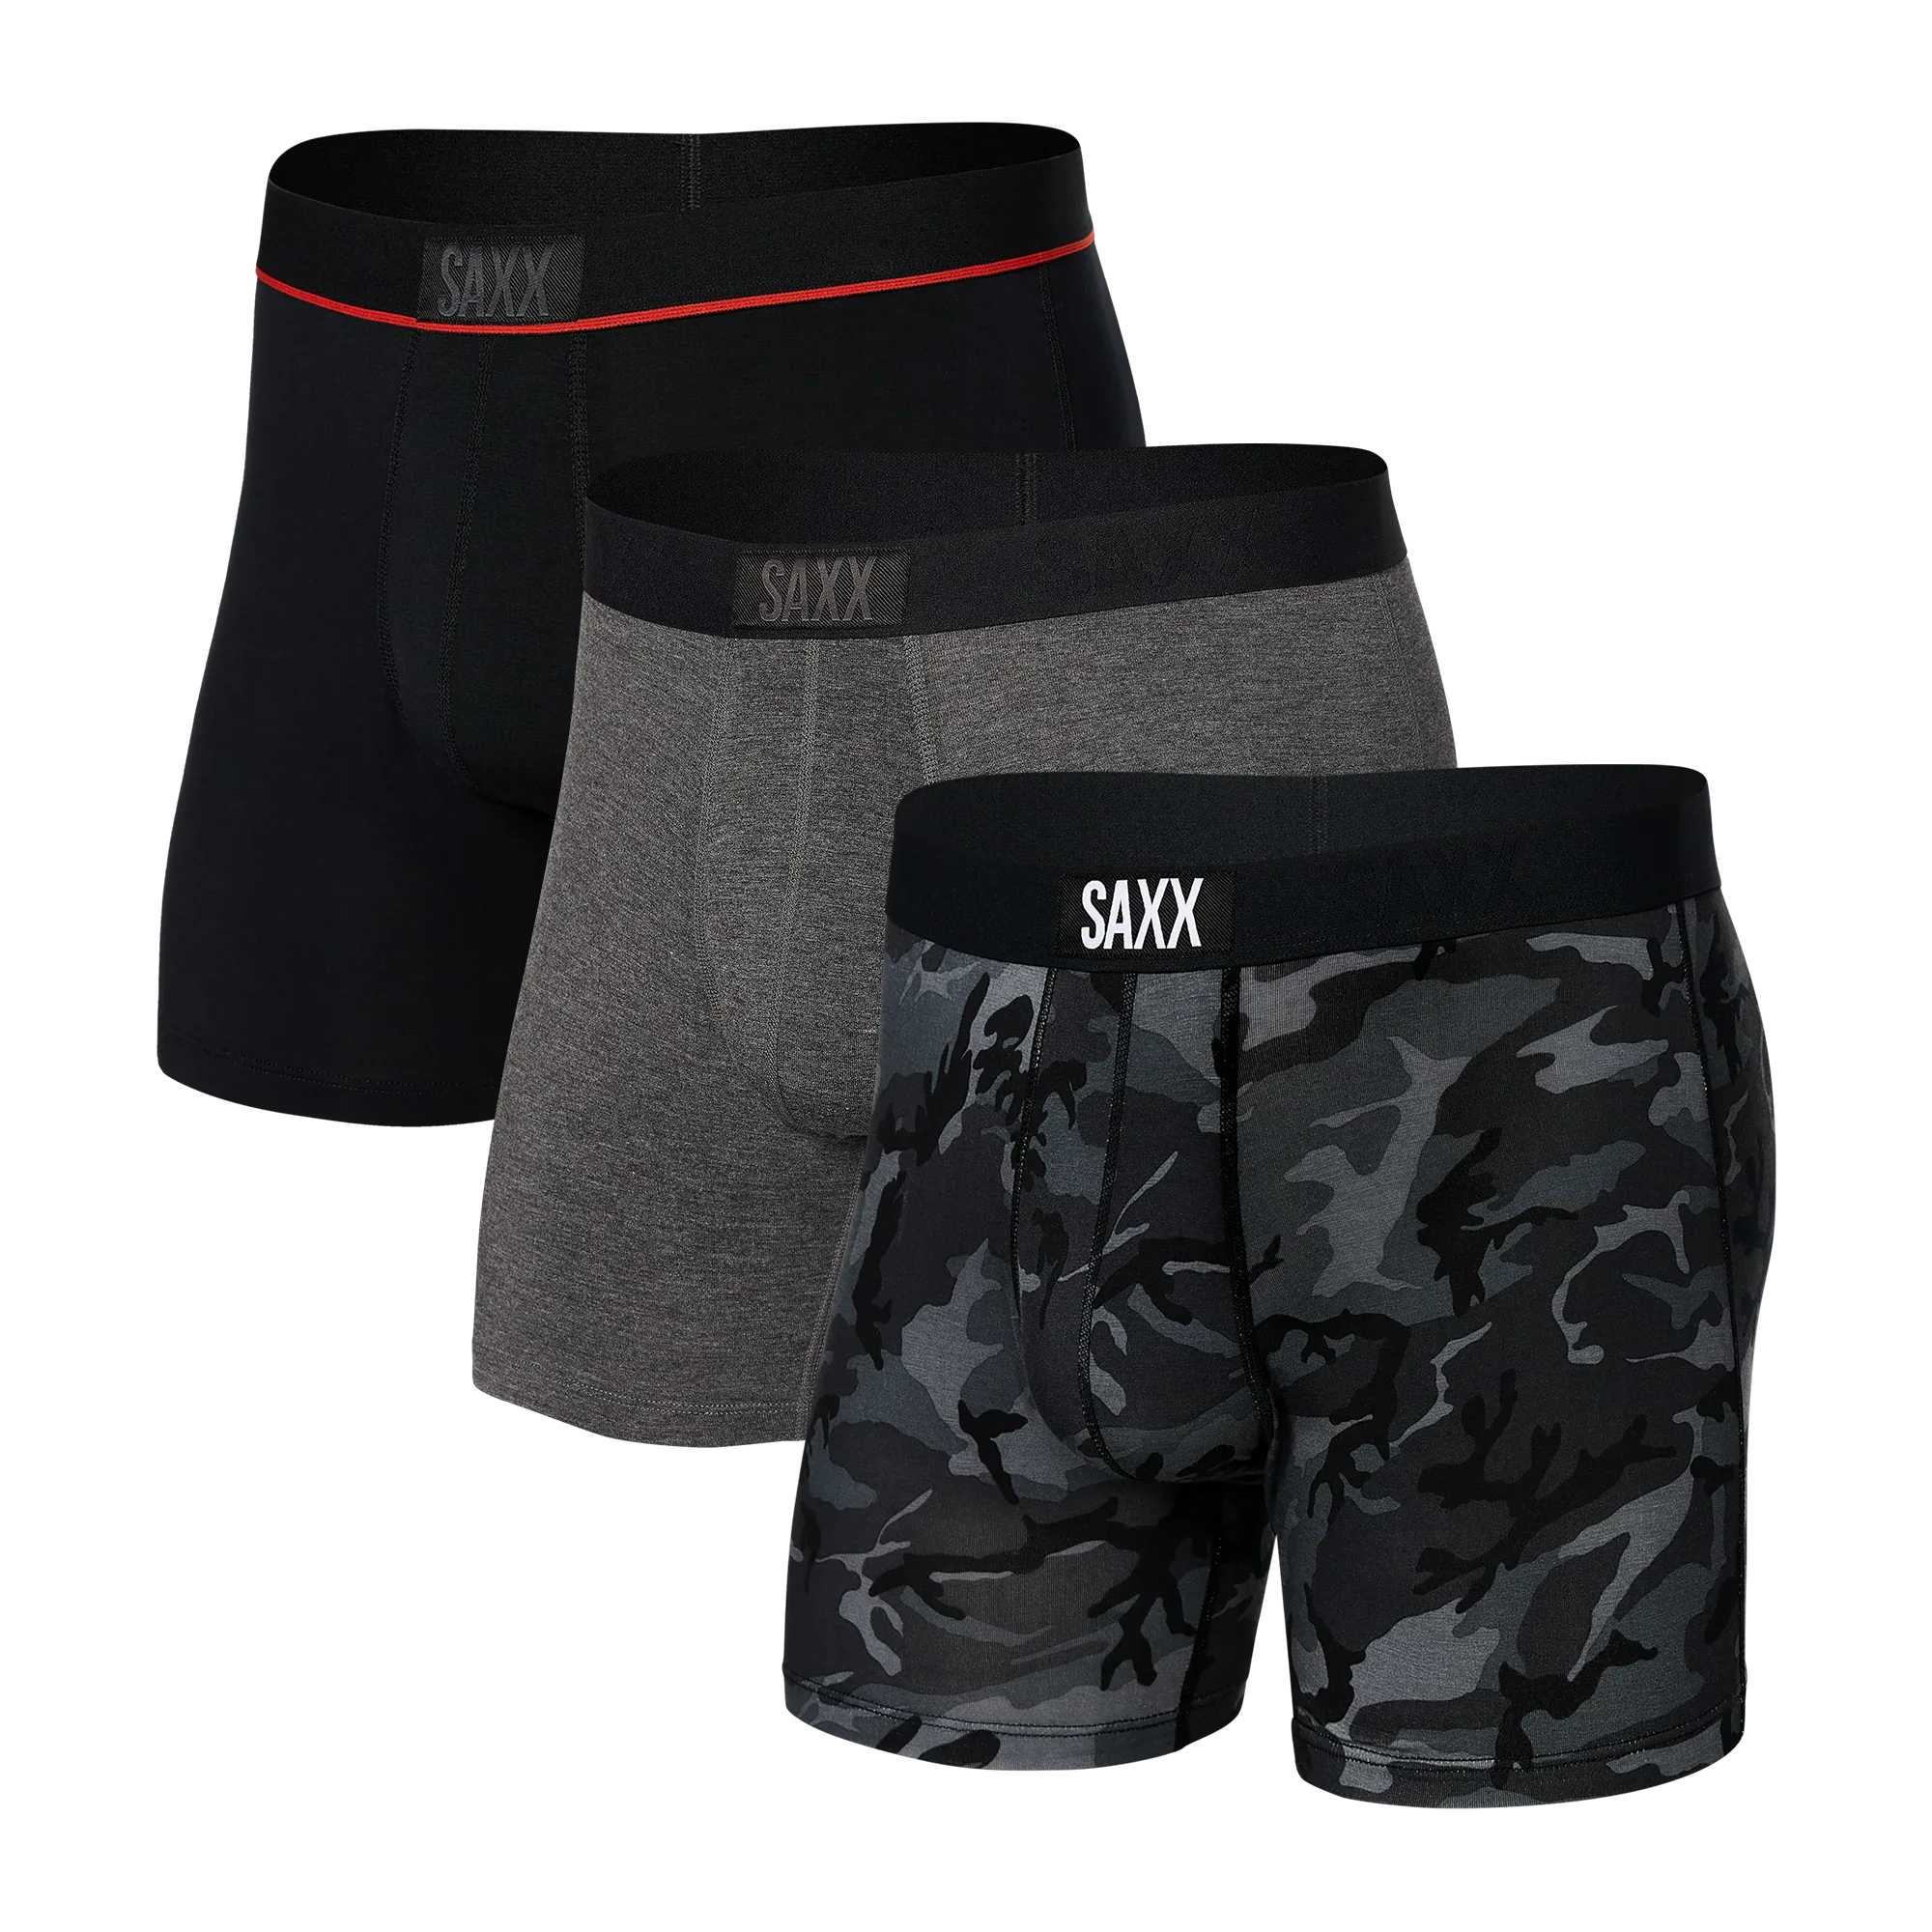 'SAXX Vibe 3-Pack Boxer Briefs - Wood Camo/Graphite Heather/Black' in 'Wood Camo/Graphite Heather/Black' colour